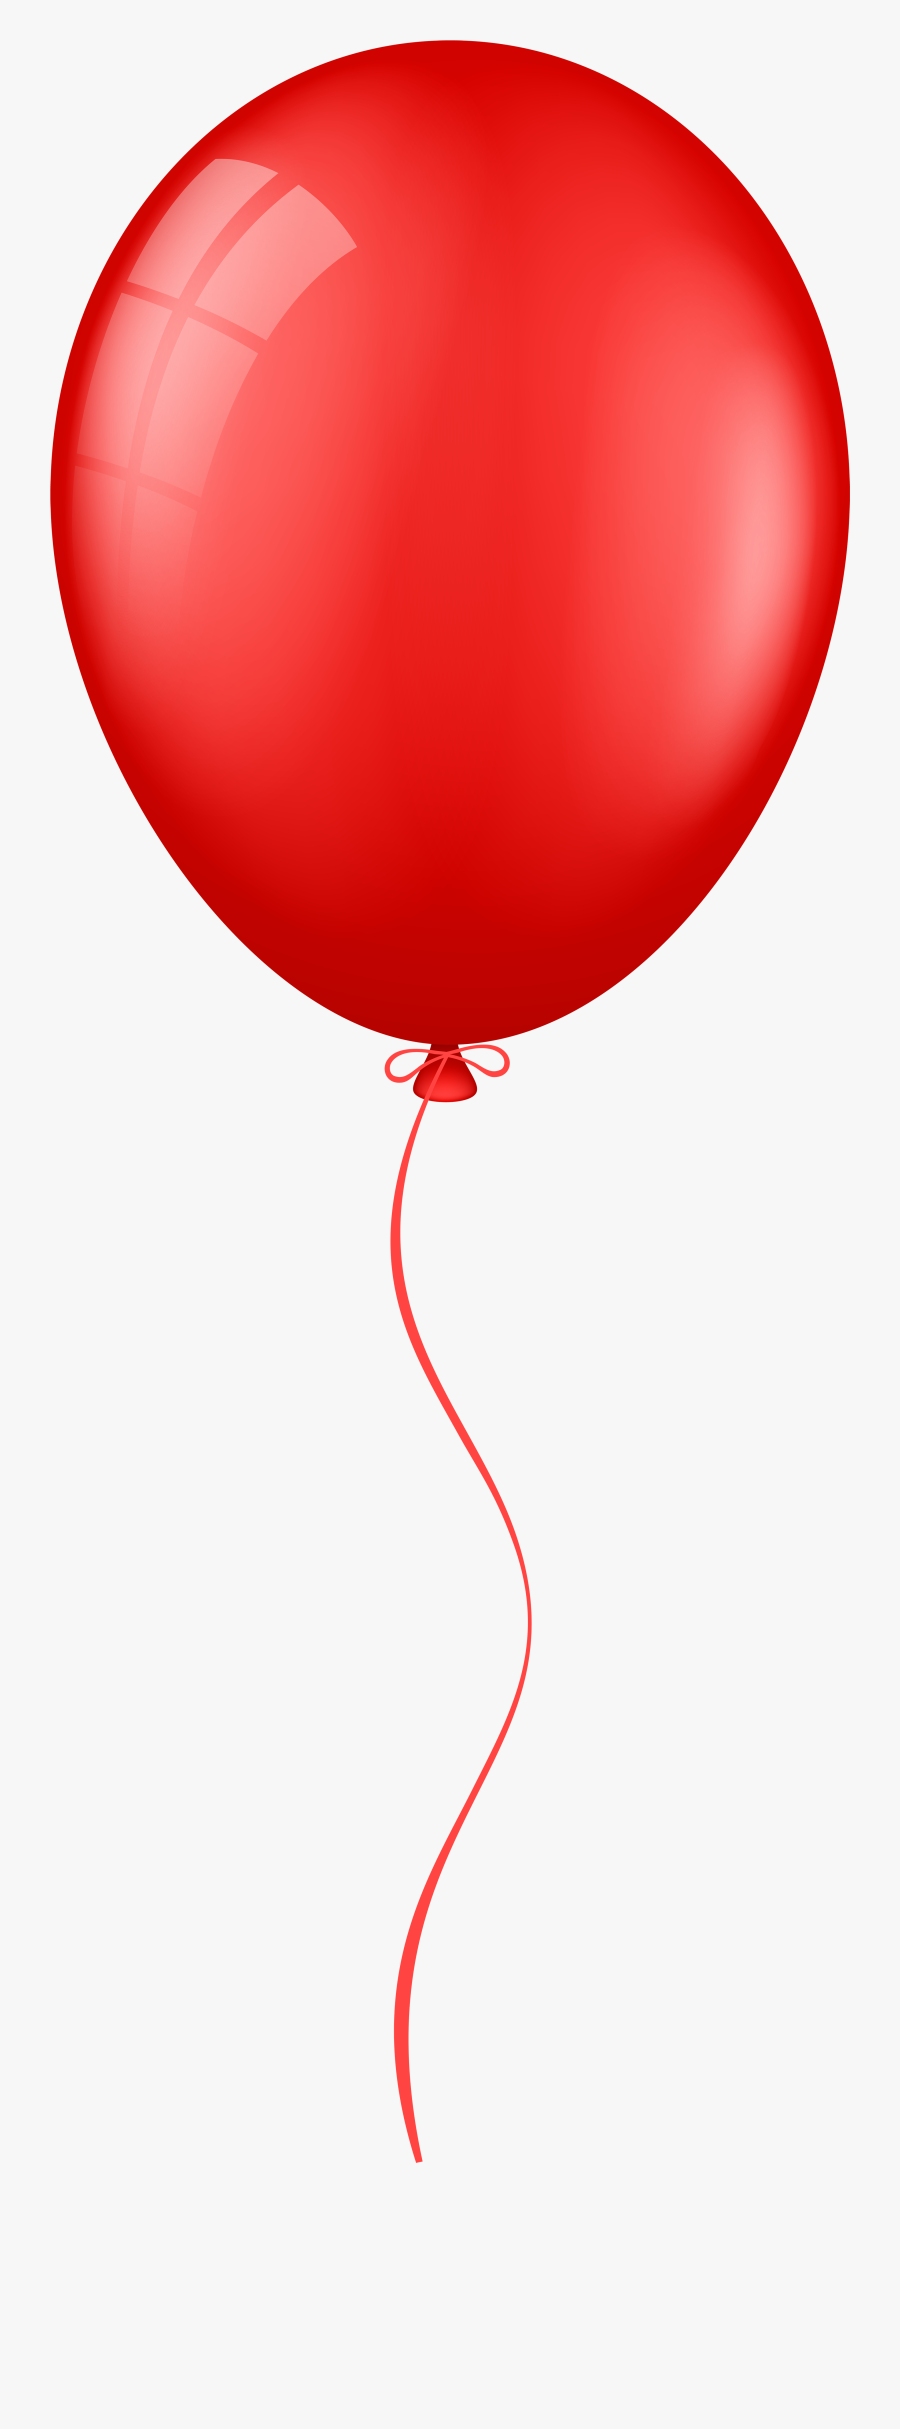 Balloon Clipart Dark Red - Red Balloon No Background, Transparent Clipart